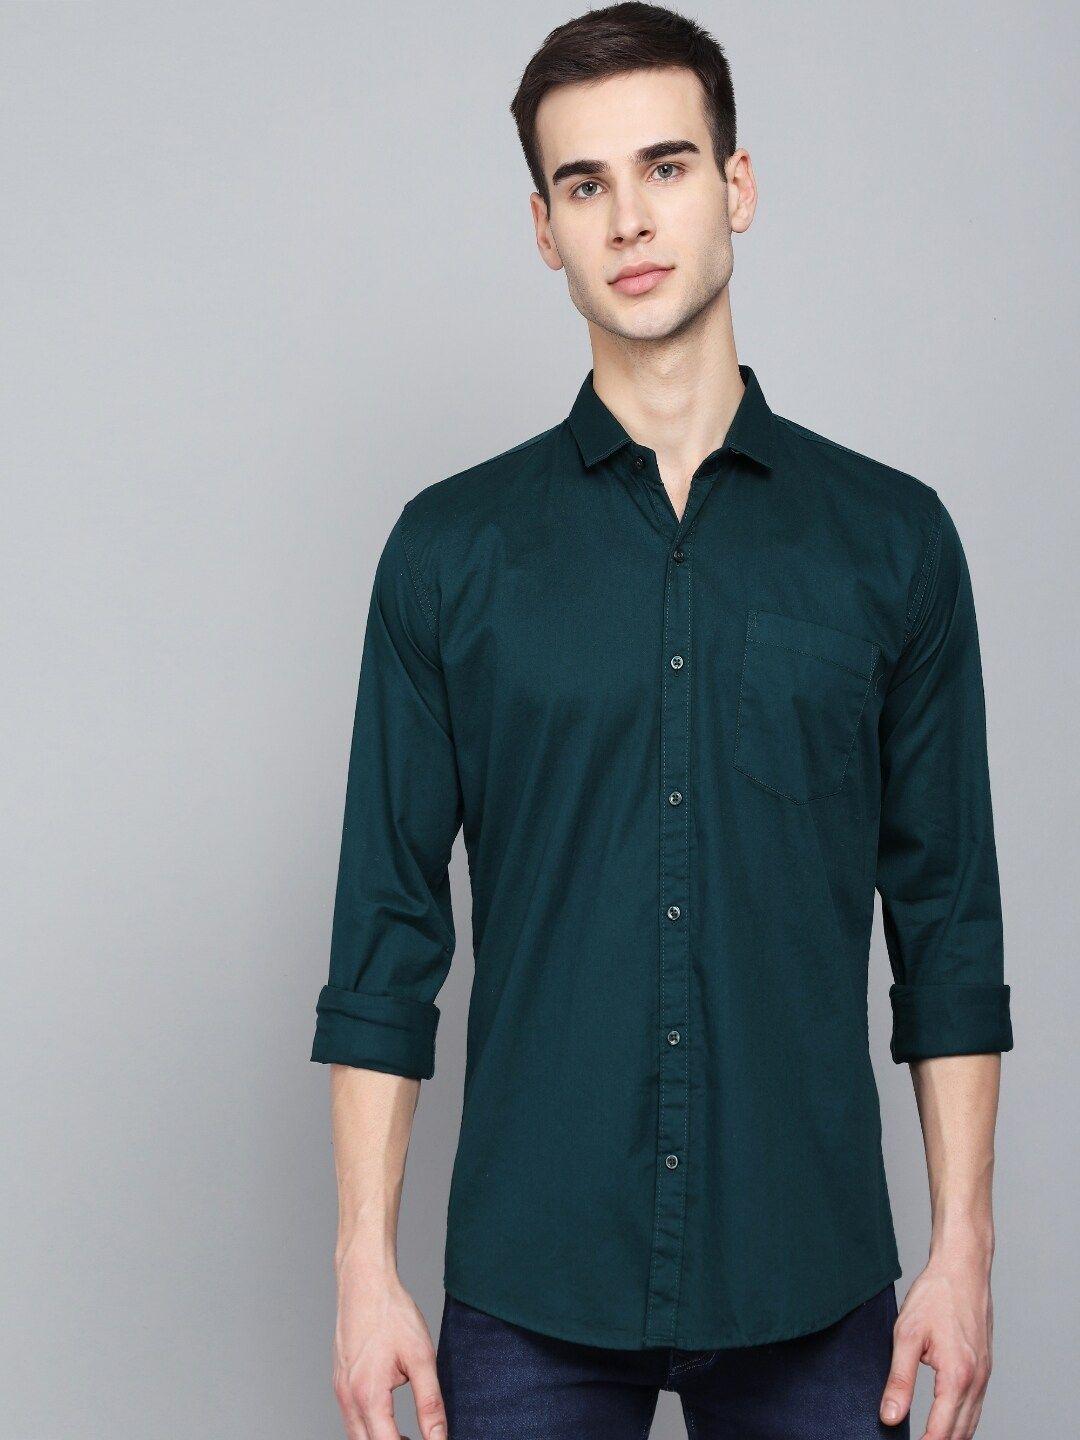 studio nexx standard slim fit twill pure cotton casual shirt